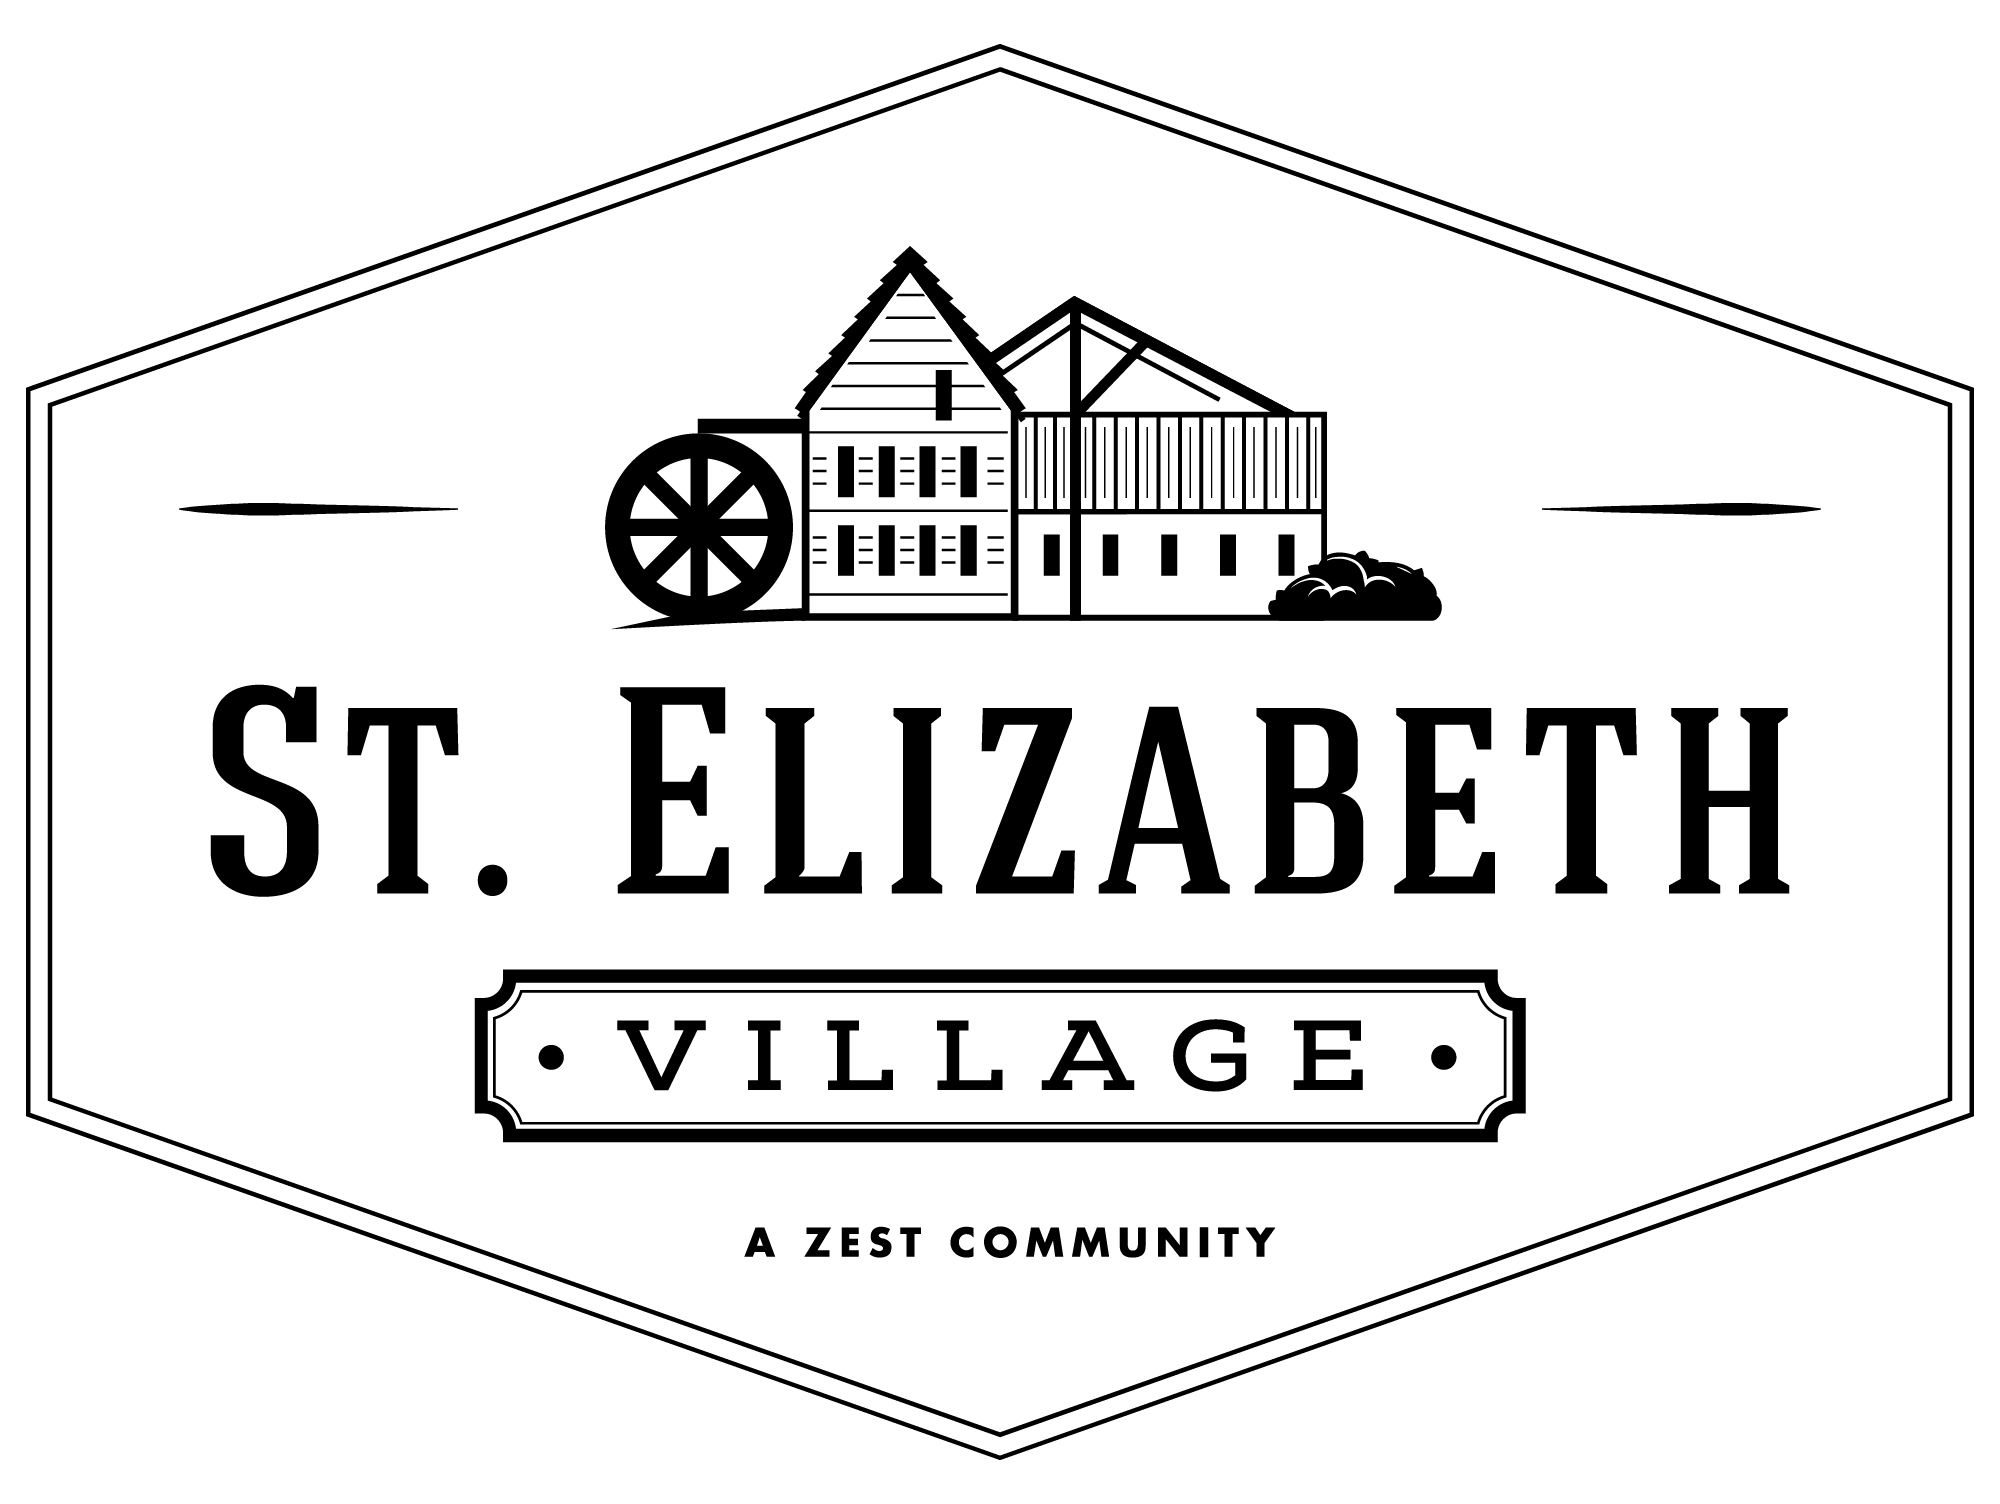 Zest Communities - St. Elizabeth Village 